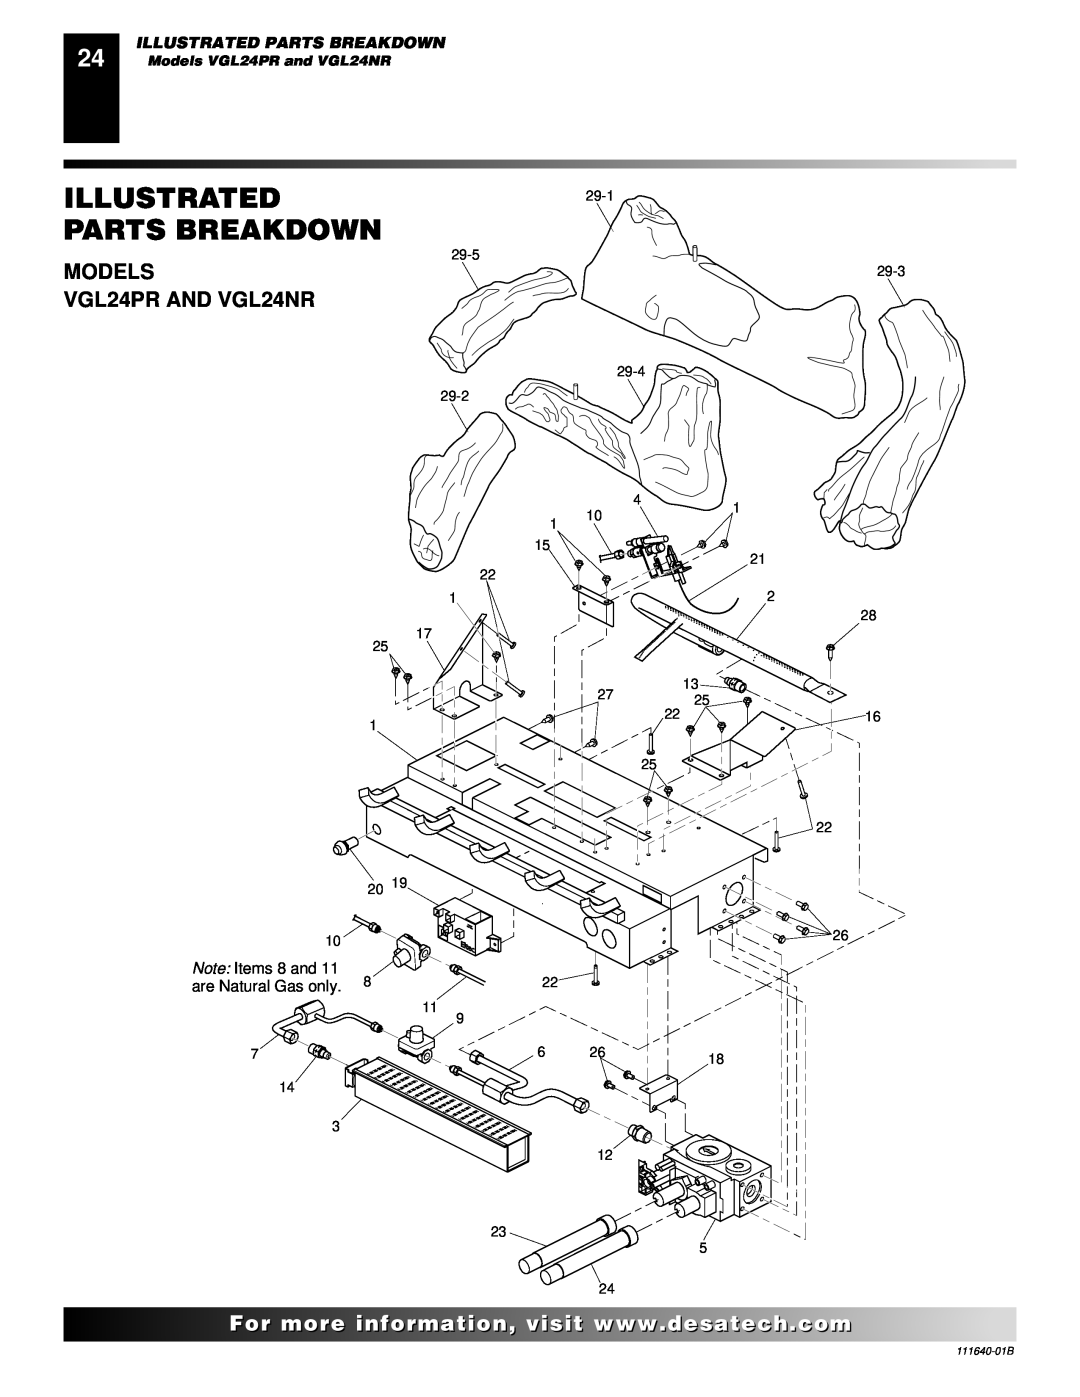 Desa installation manual Illustrated Parts Breakdown, MODELS VGL24PR AND VGL24NR, Models VGL24PR and VGL24NR 